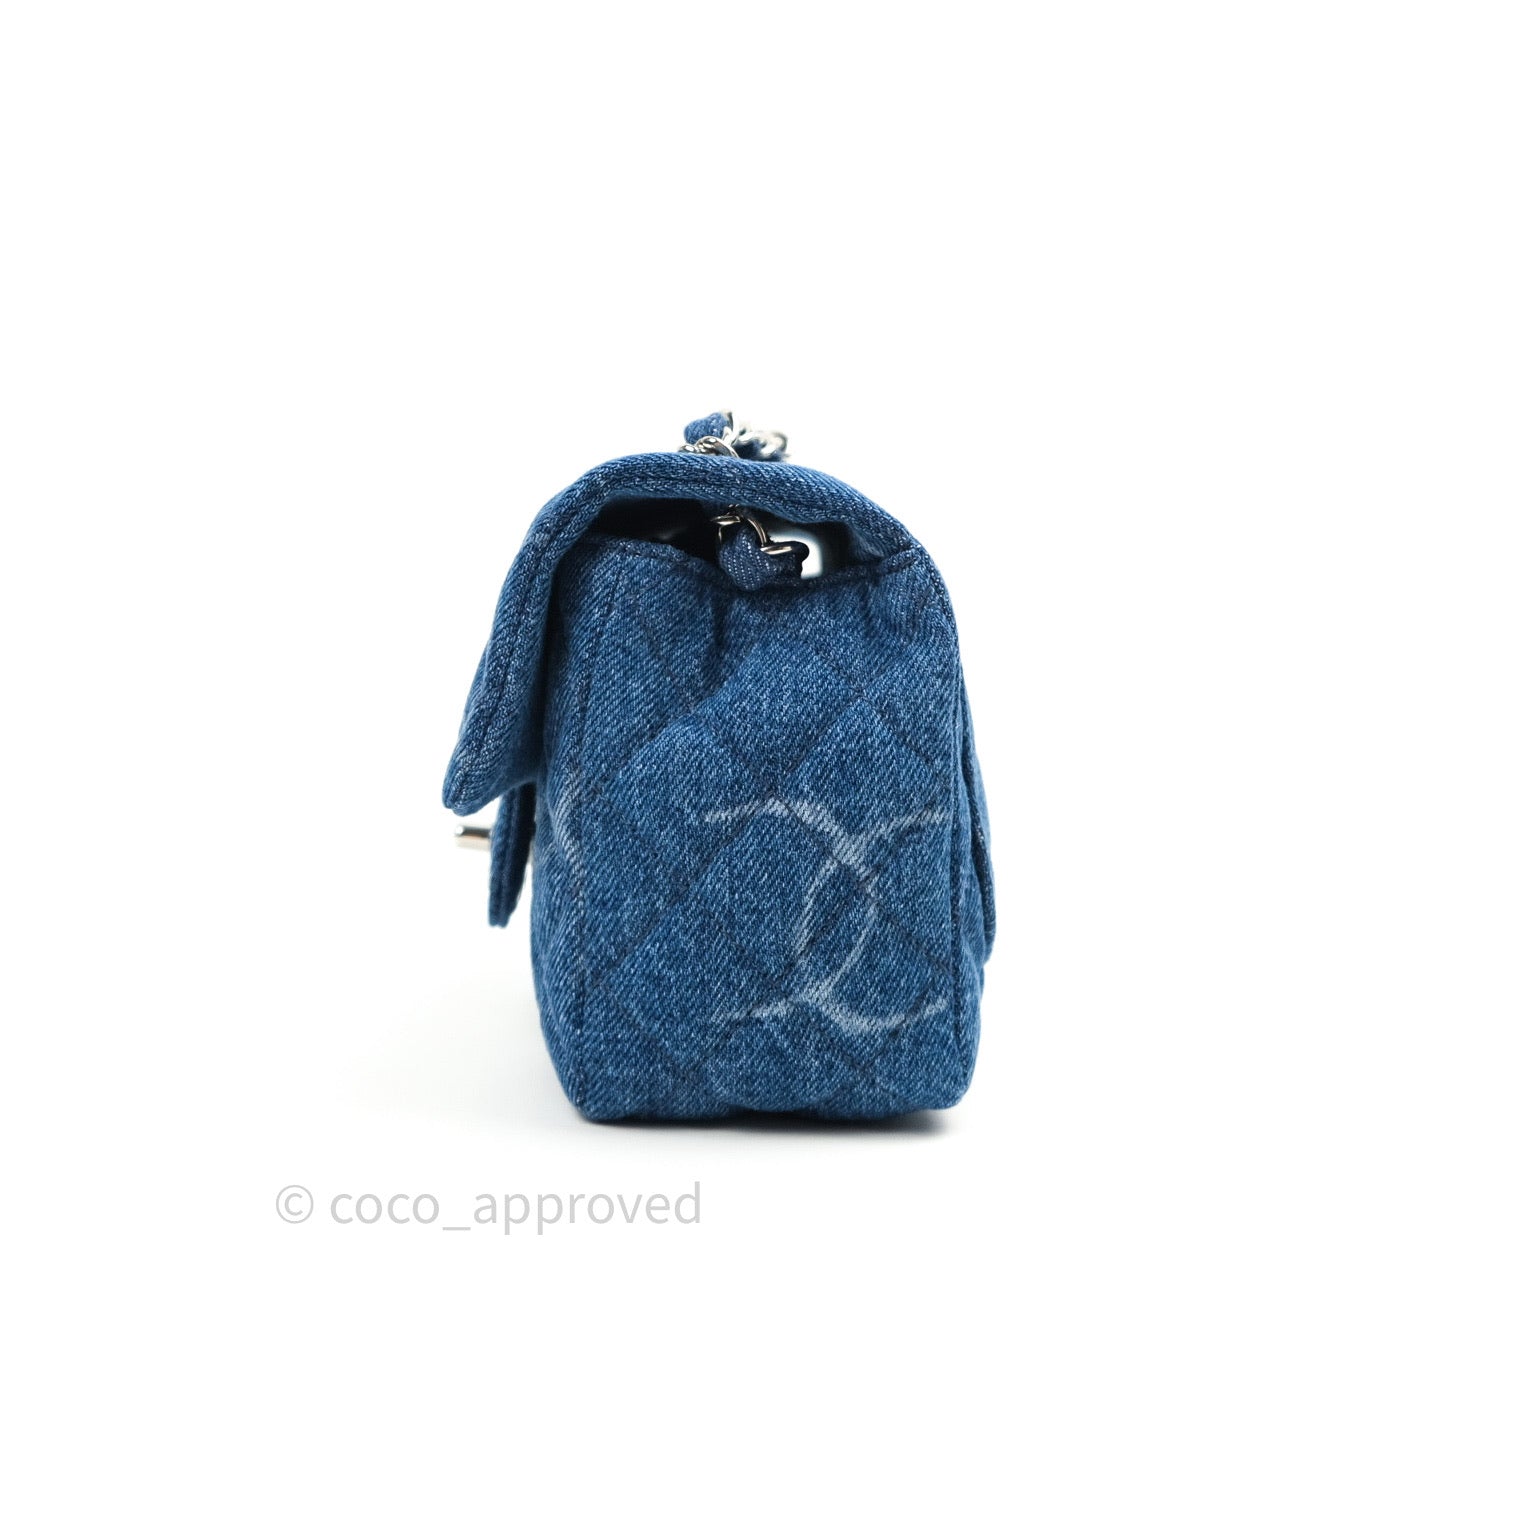 Chanel Graffiti Blue Quilted Denim Chainlink Shoulder Bag Mini